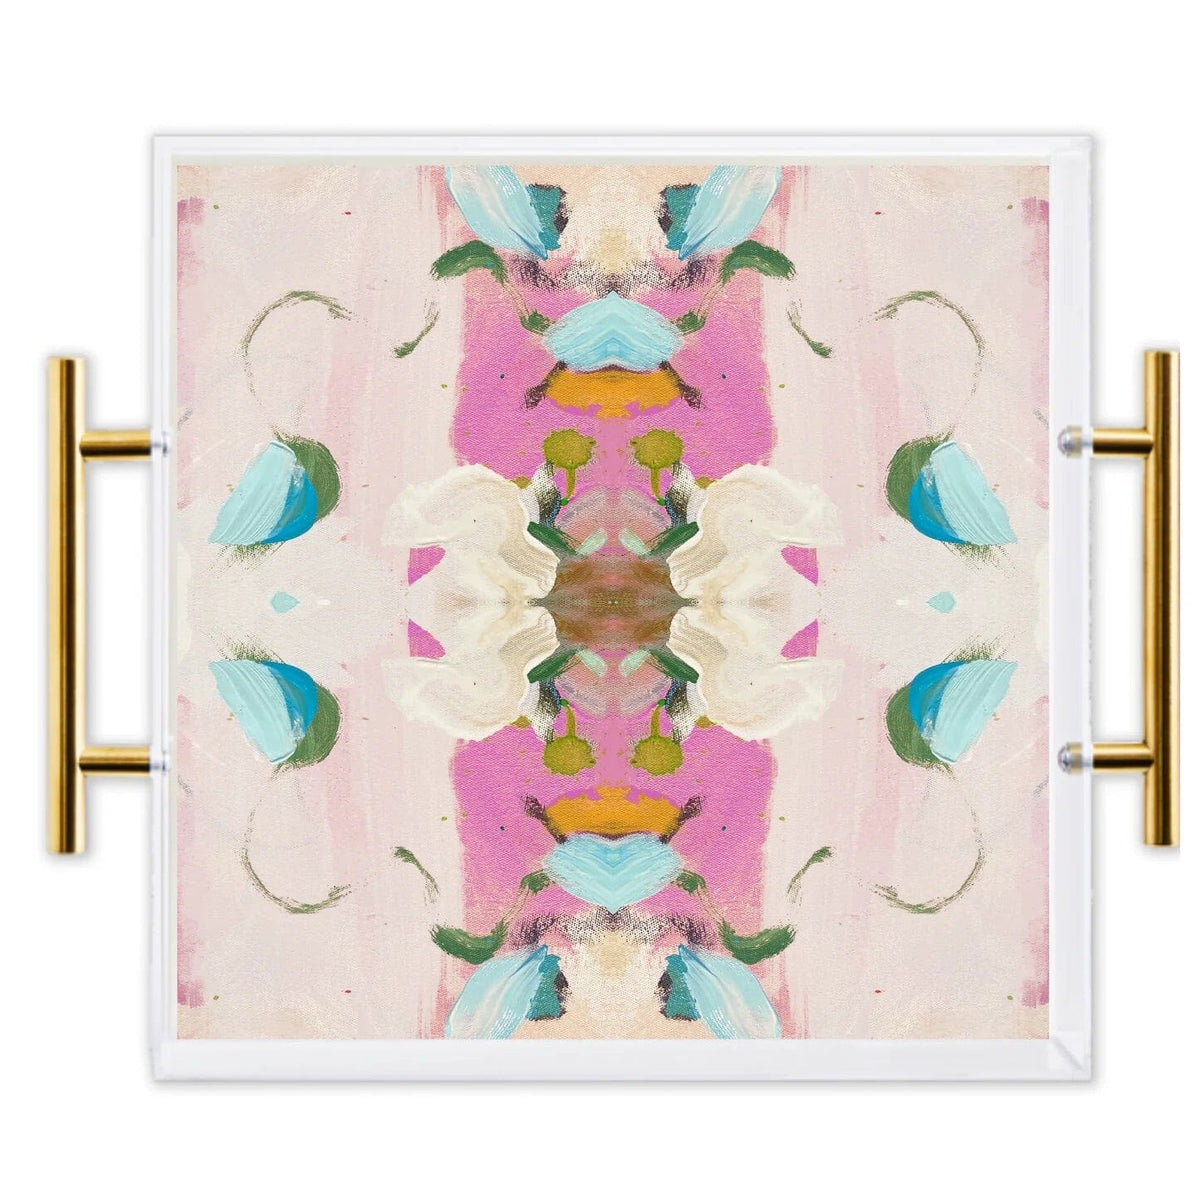 Maya Pink Acrylic Tray